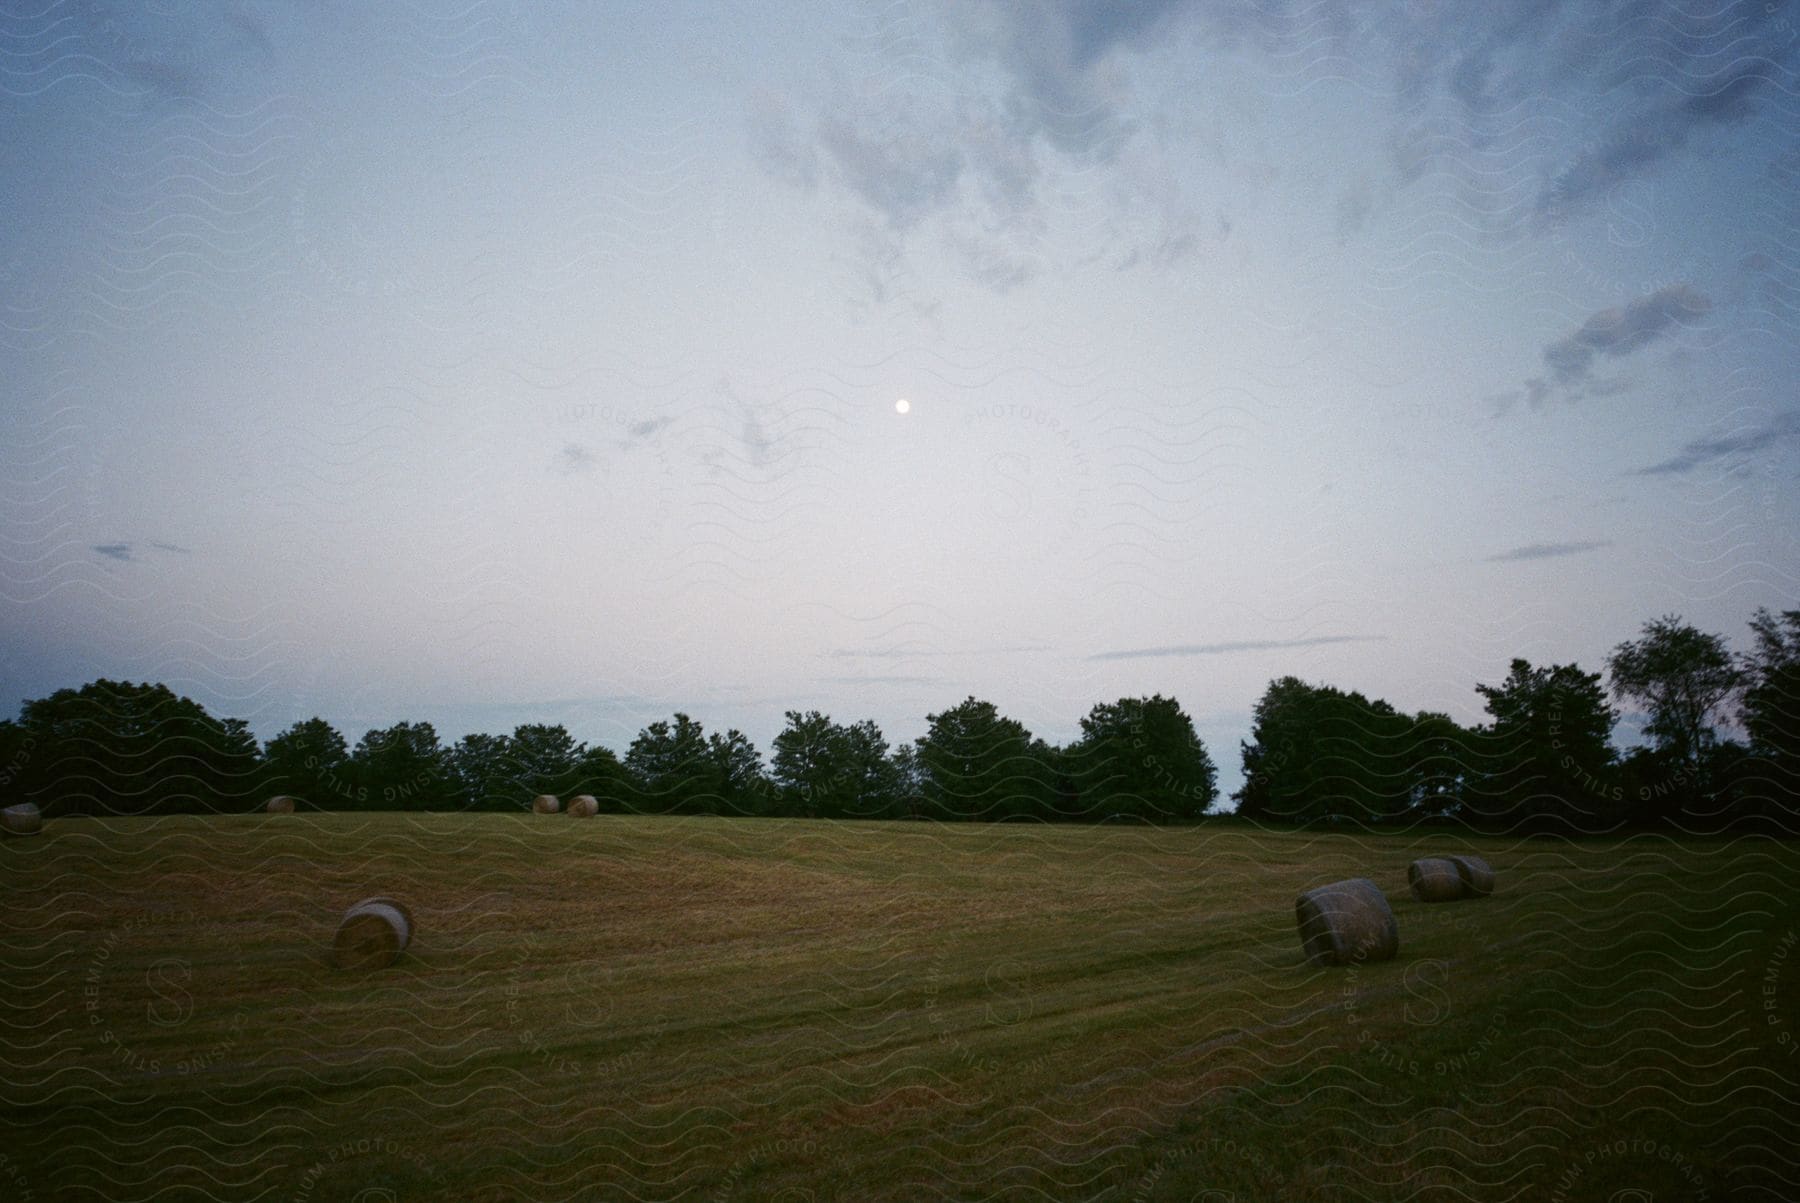 Stock photo of hay bales in a field at dusk in rural virginia